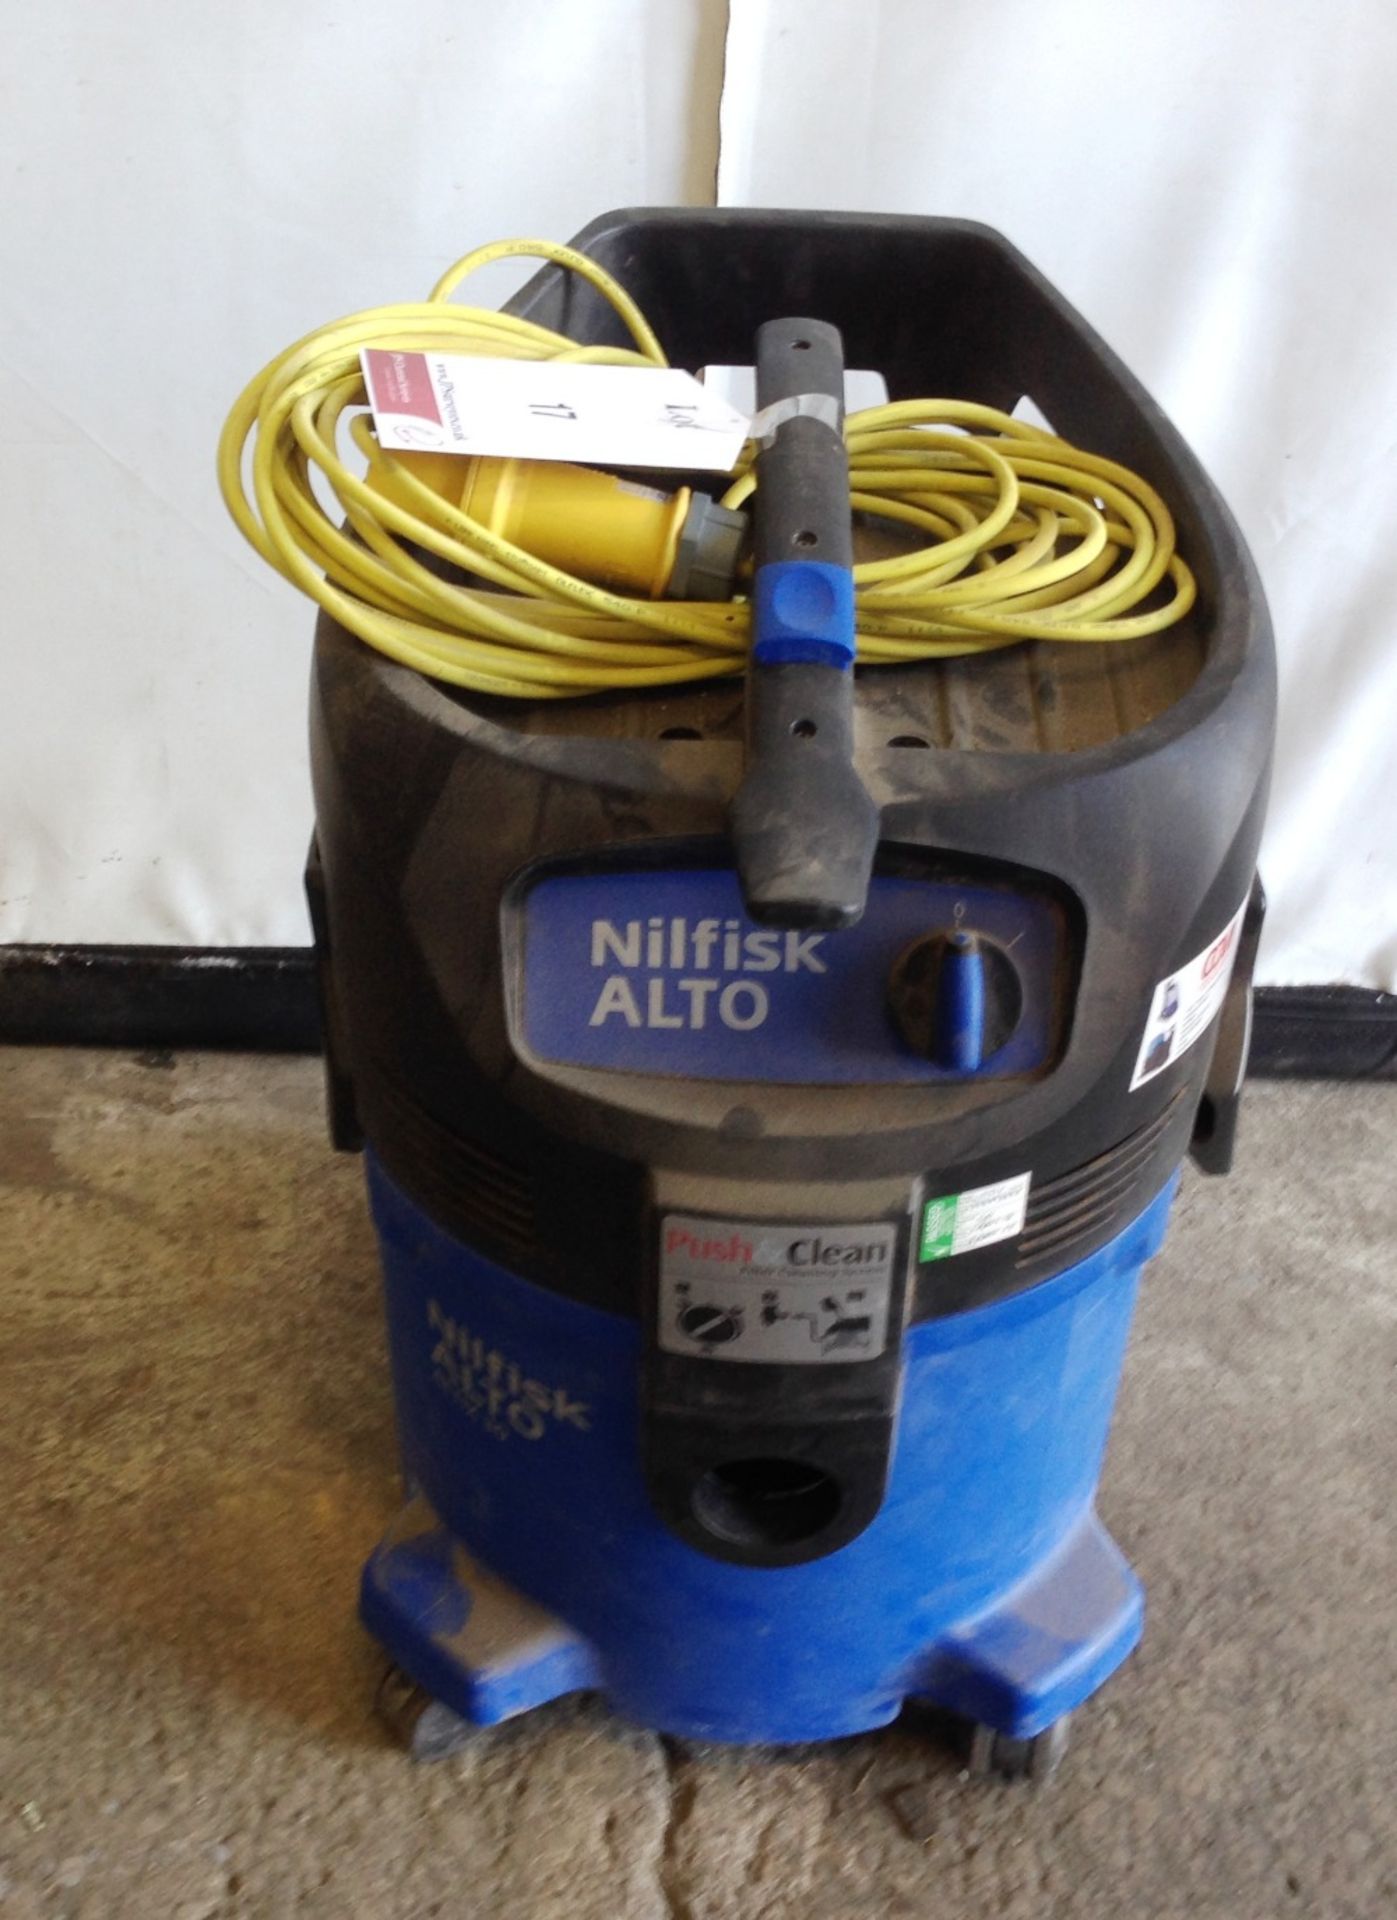 Nilfisk 110V industrial wet and dry vacuum cleaner Model: Alto Attix 30m - no hose